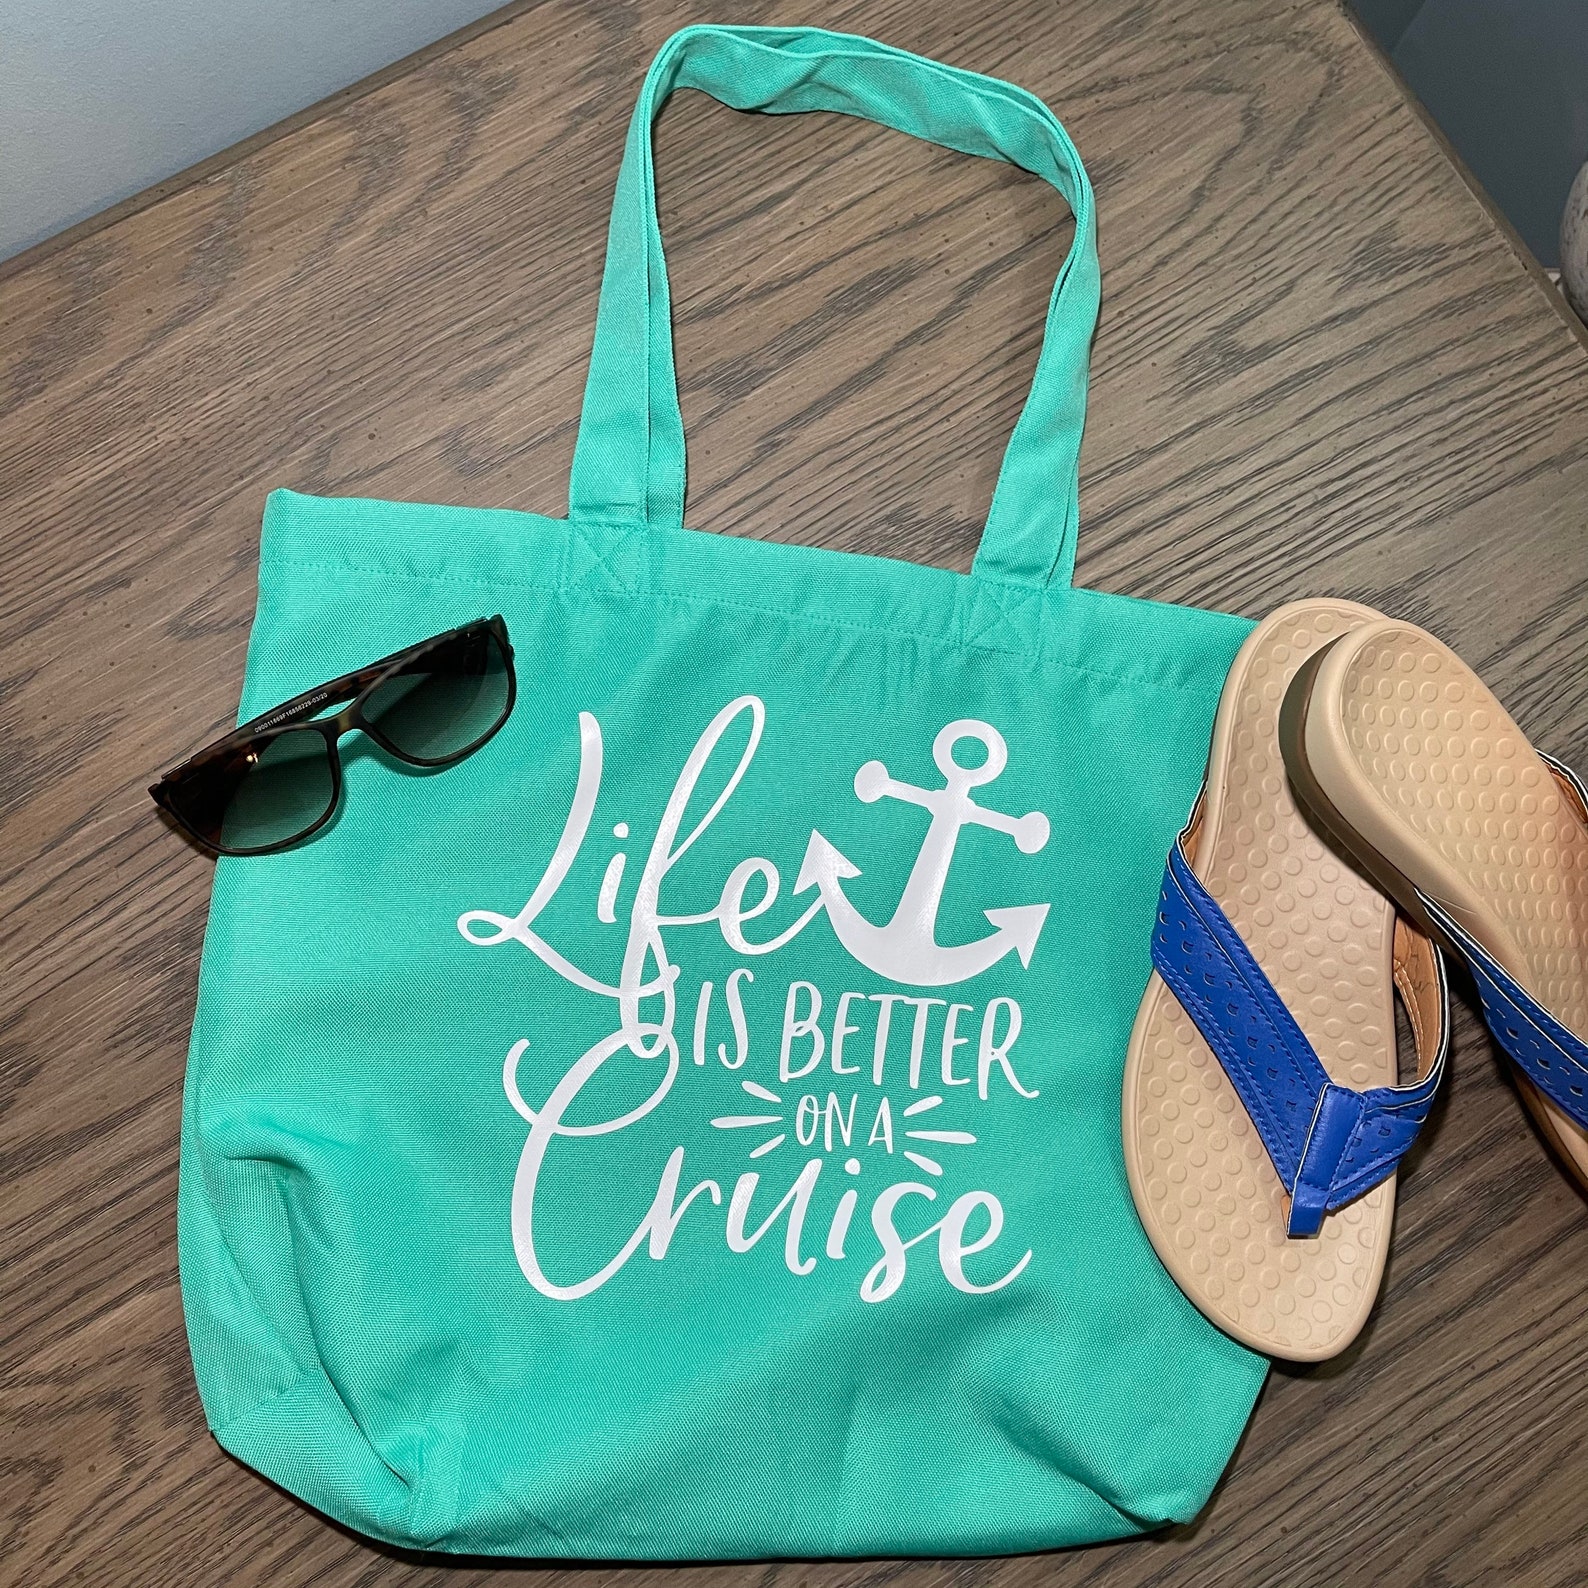 cruise bag designs